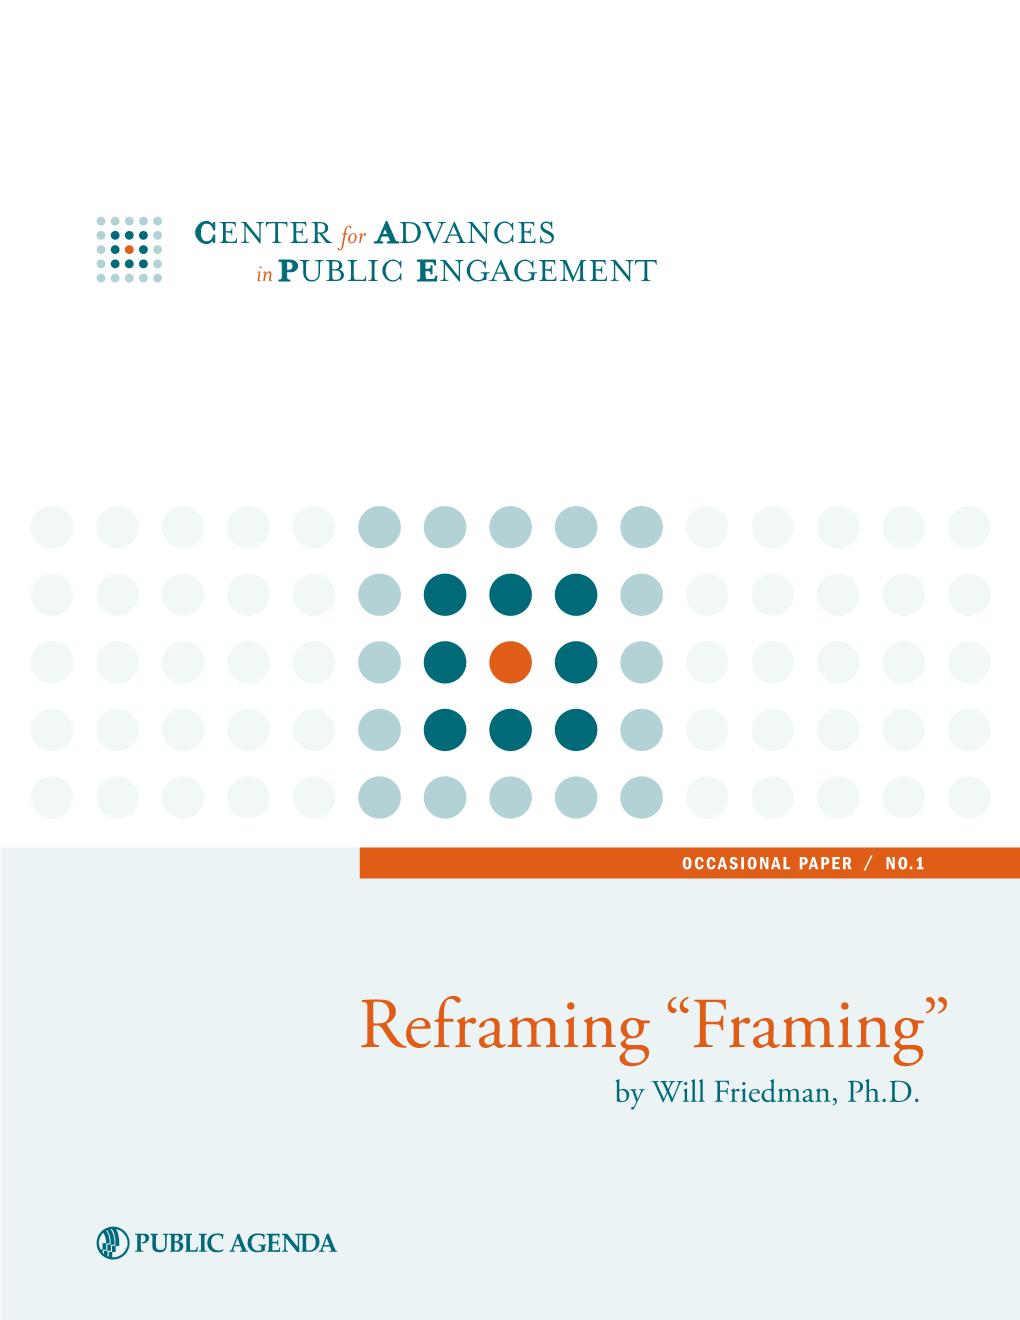 Reframing “Framing” by Will Friedman, Ph.D